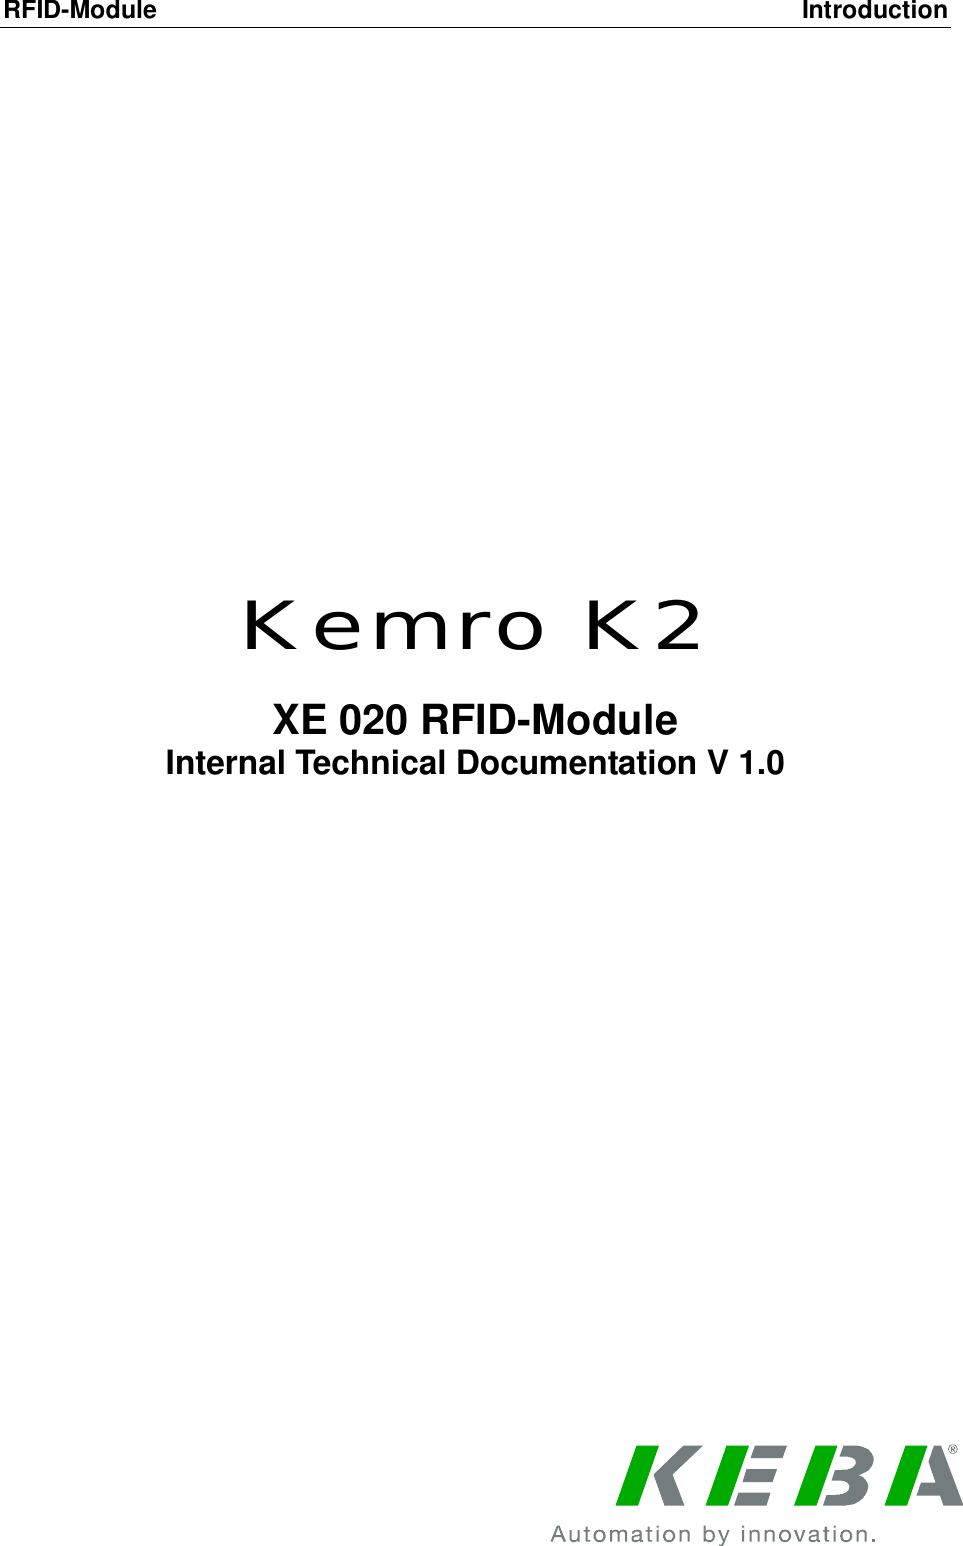 RFID-Module Introduction                  Kemro K2  XE 020 RFID-Module Internal Technical Documentation V 1.0     